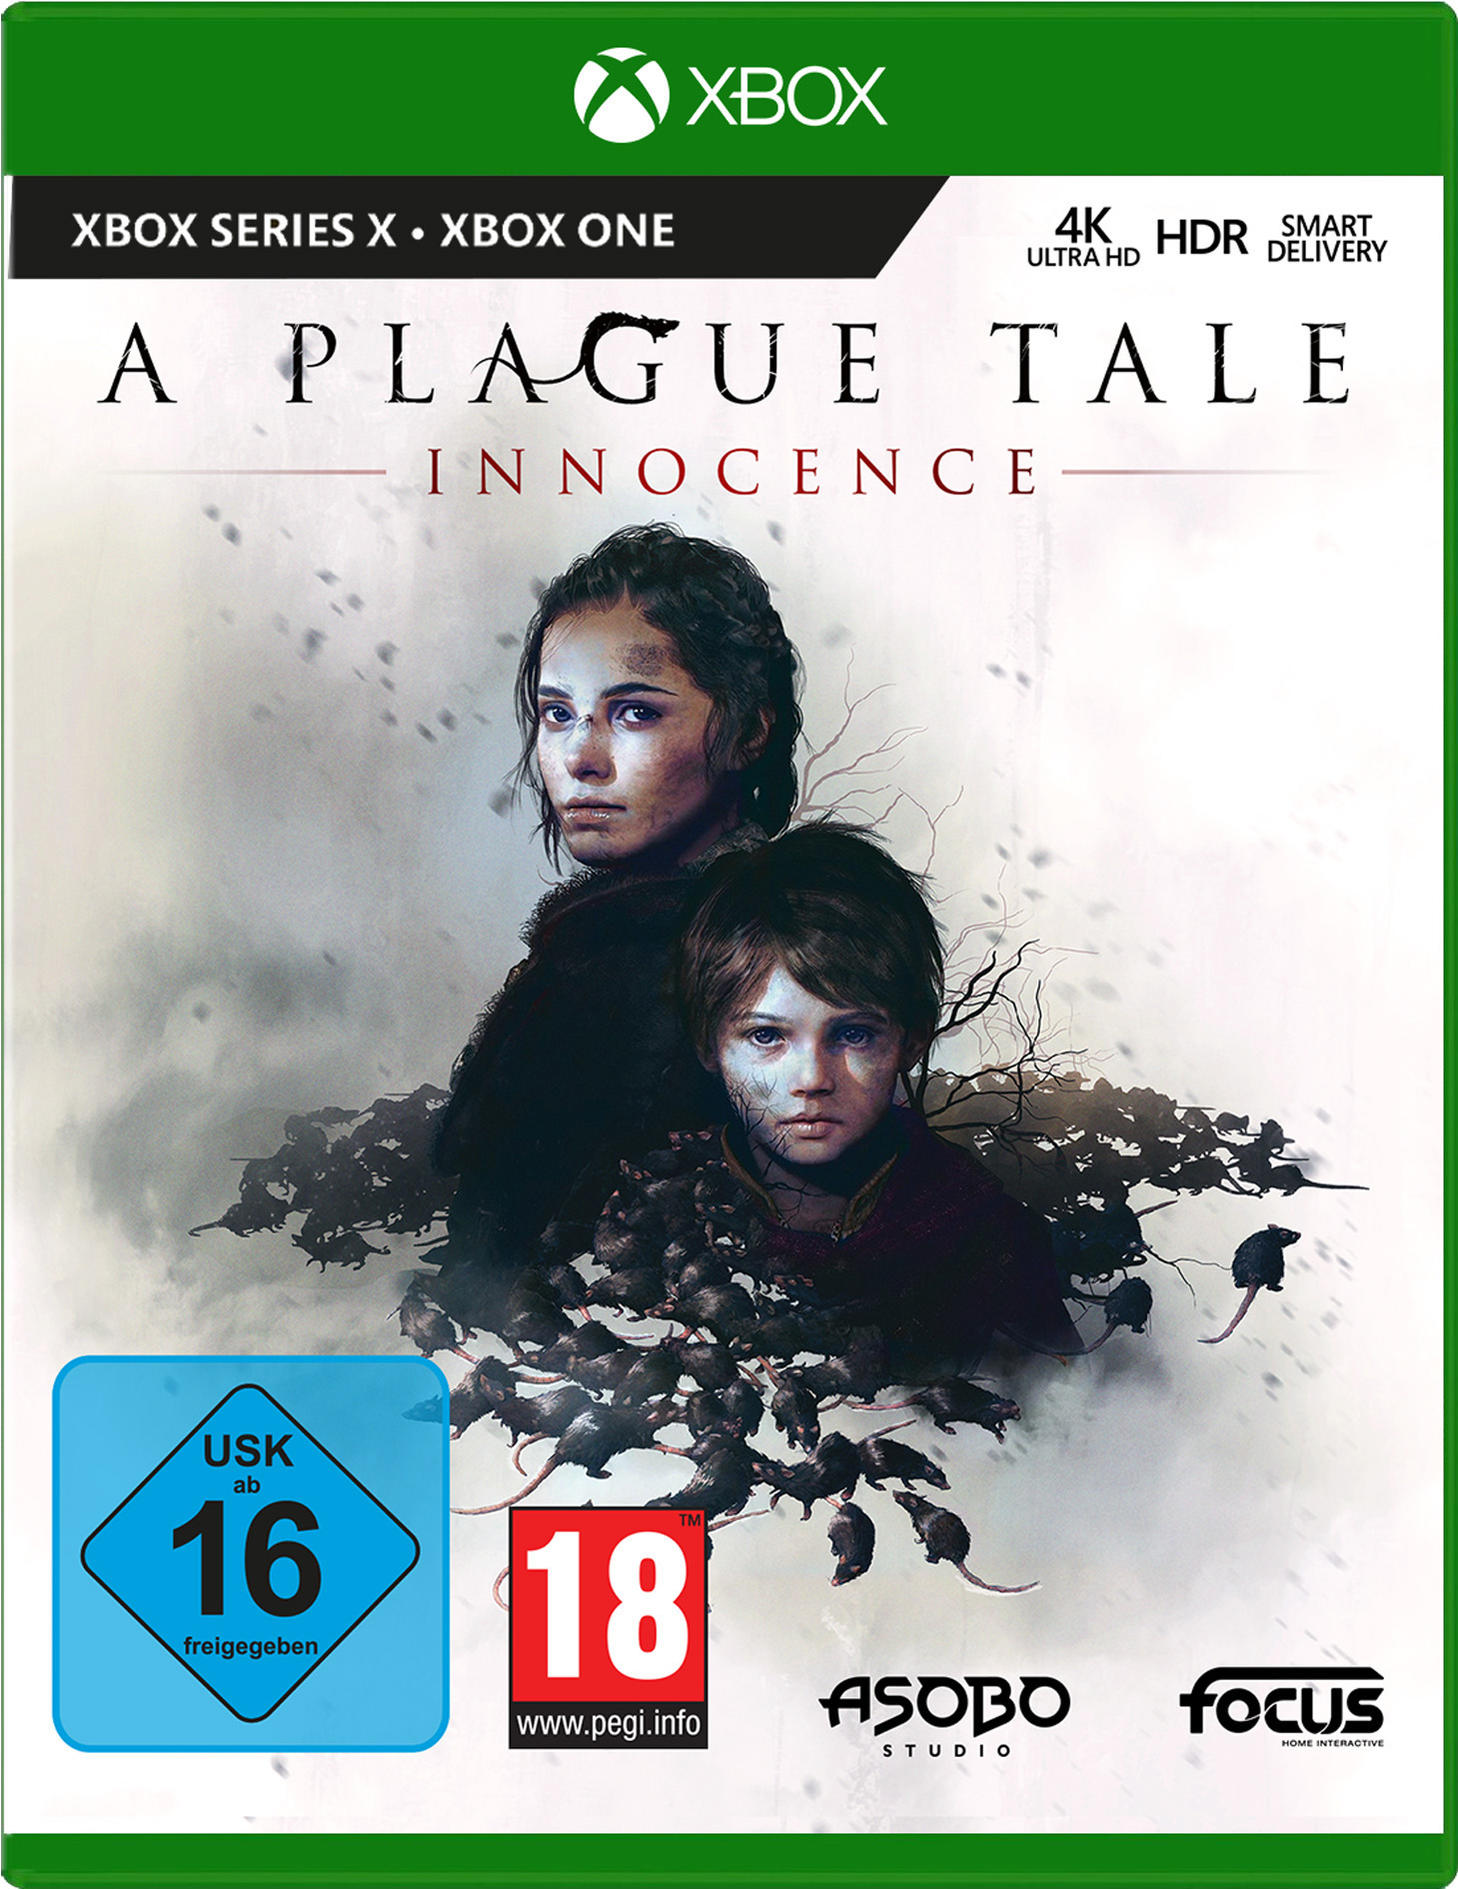 - PLAGUE Xbox XBX X] - Series [Xbox One & A INNOCENCE TALE